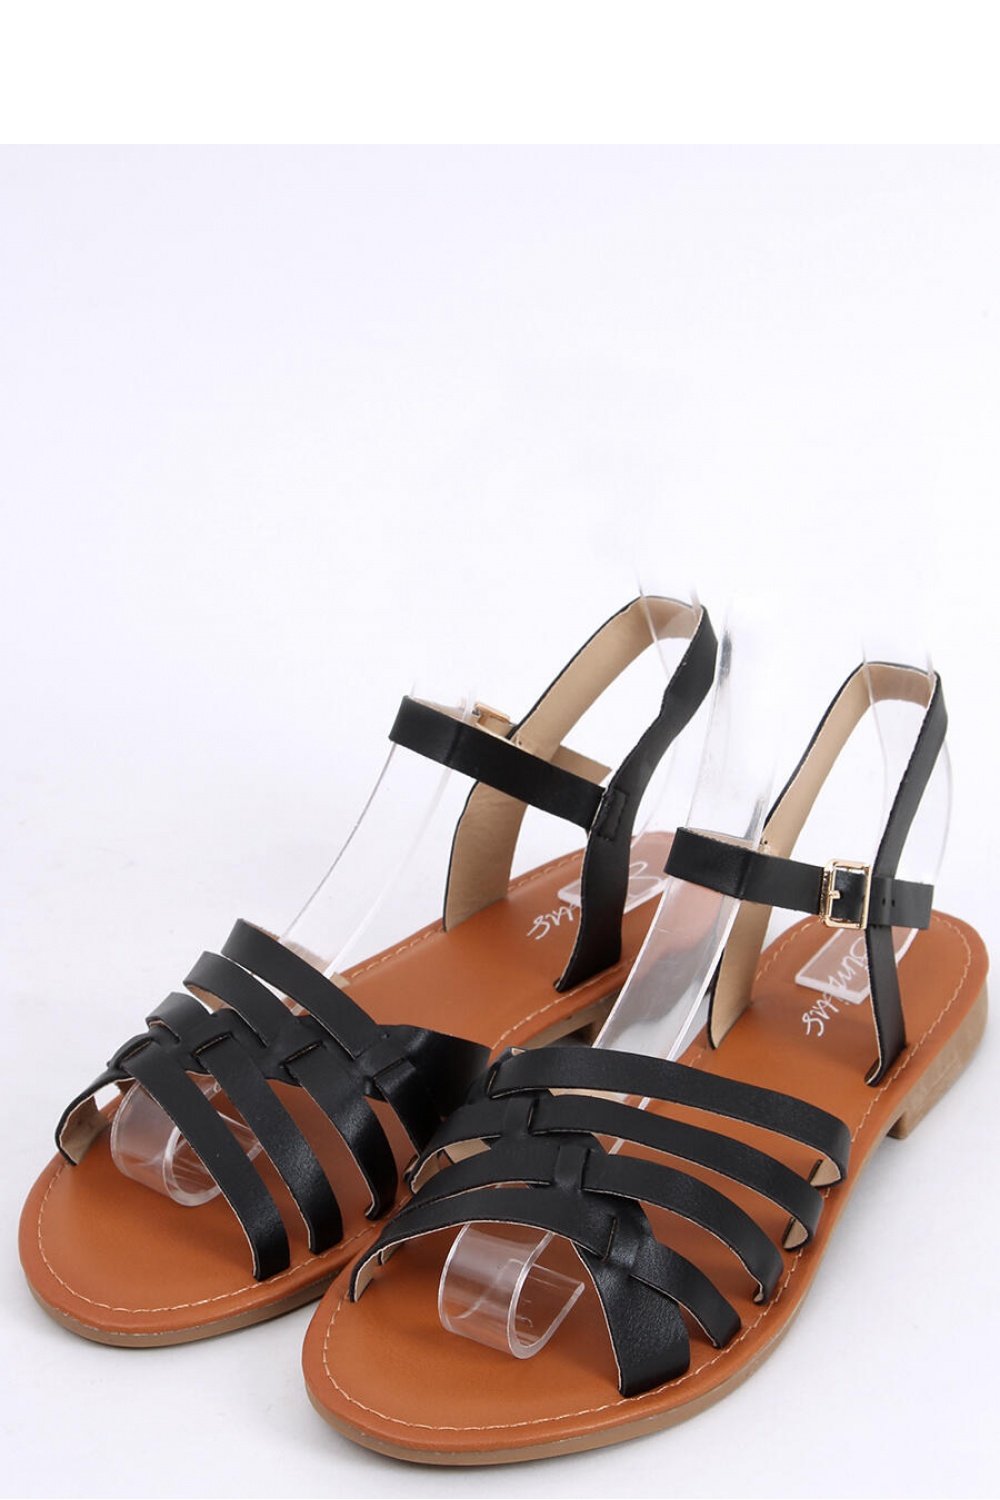 Sandals model 166842 Inello Posh Styles Apparel